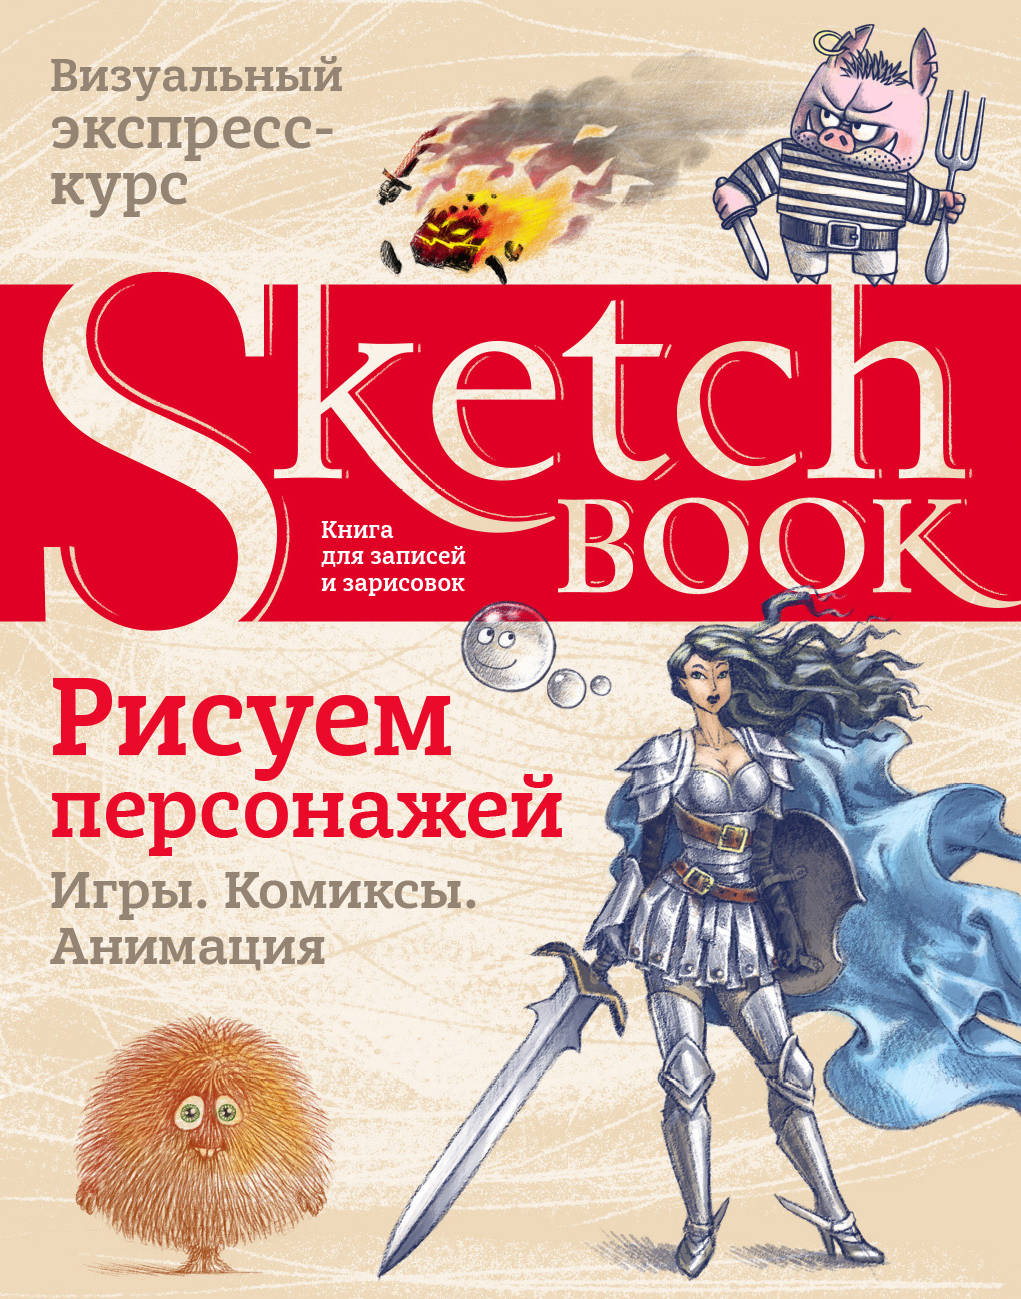 Sketchbook.  : , , 